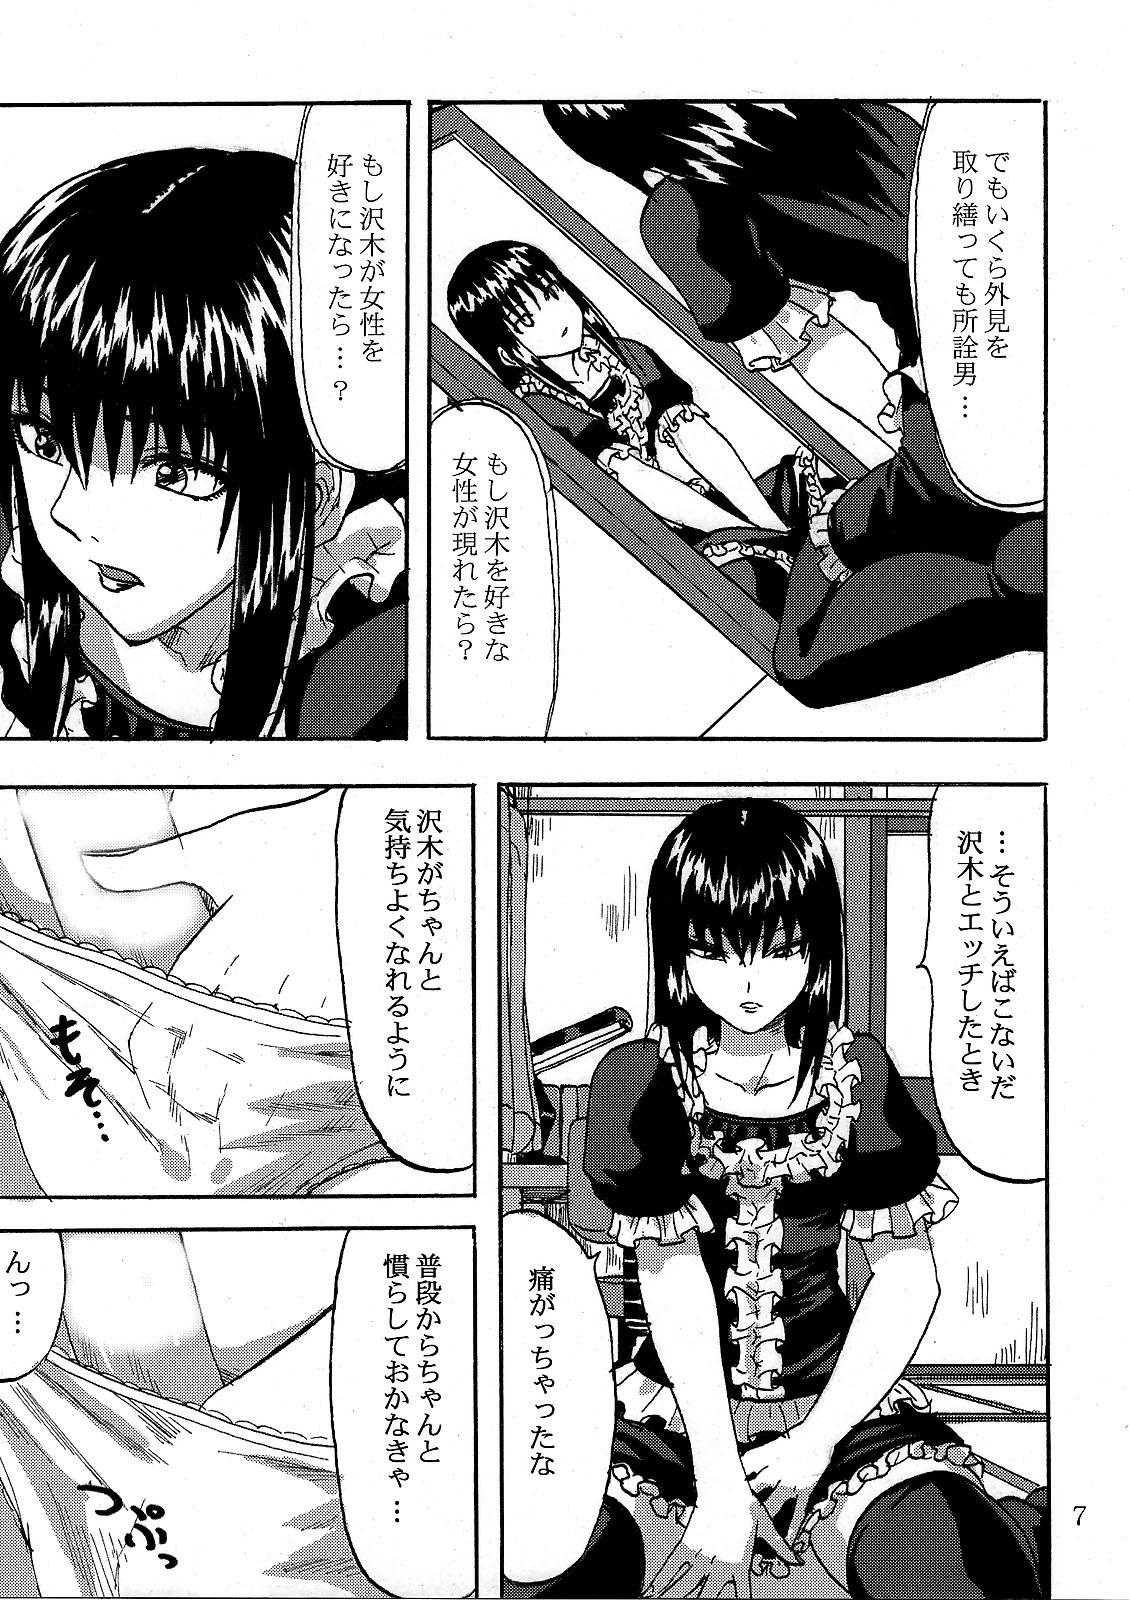 Bubblebutt Futari aruki 2 - Moyashimon Super - Page 7